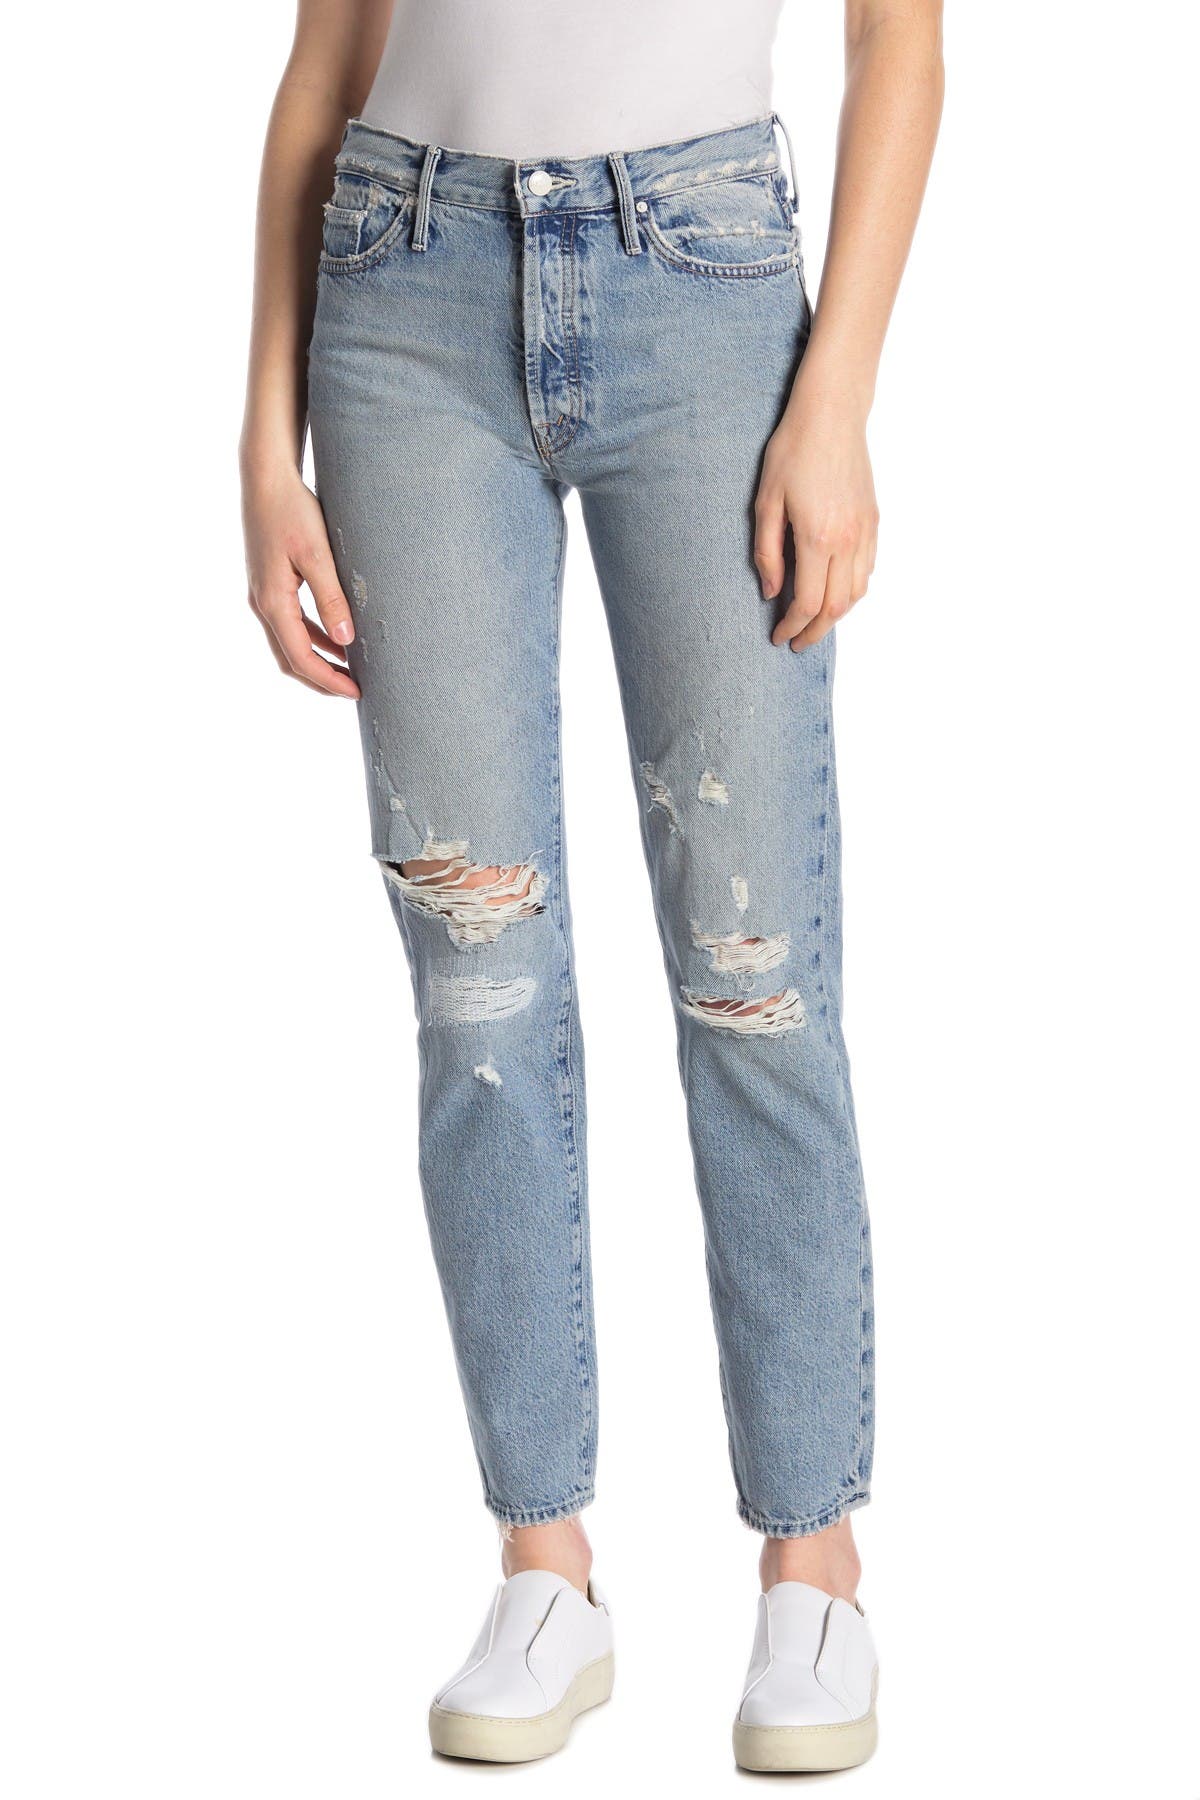 nordstrom rack distressed jeans